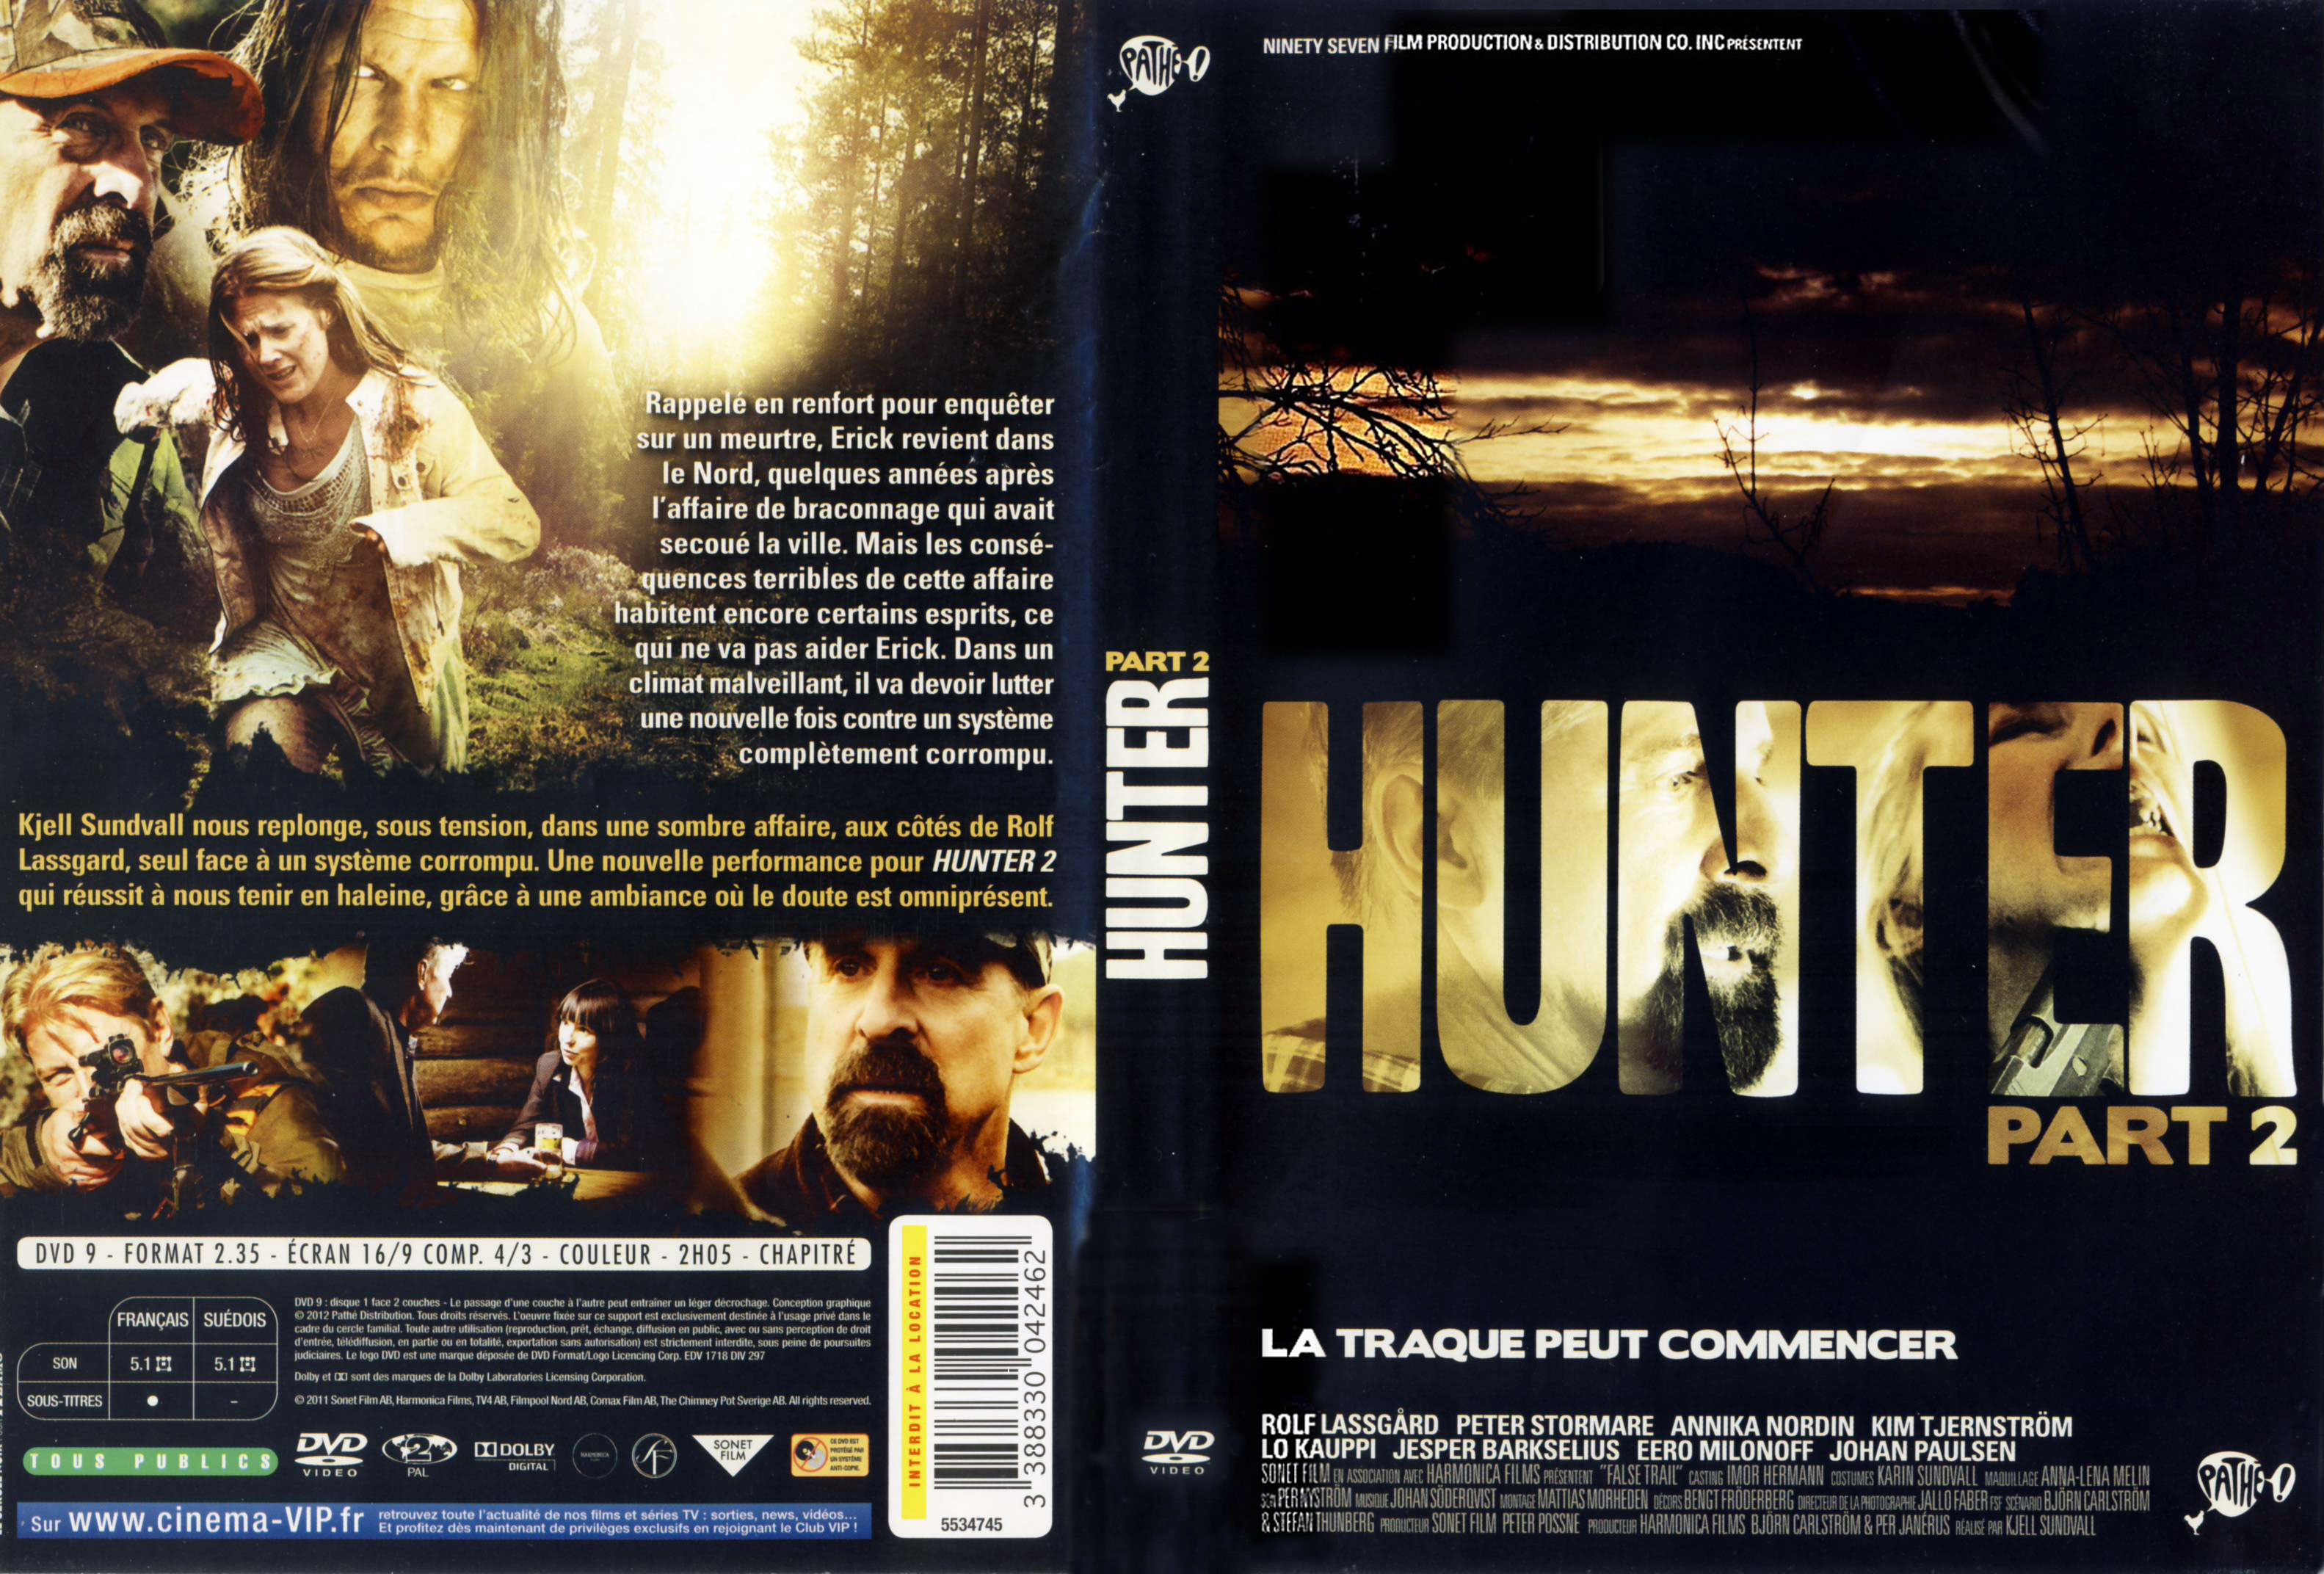 Jaquette DVD Hunter Part 2